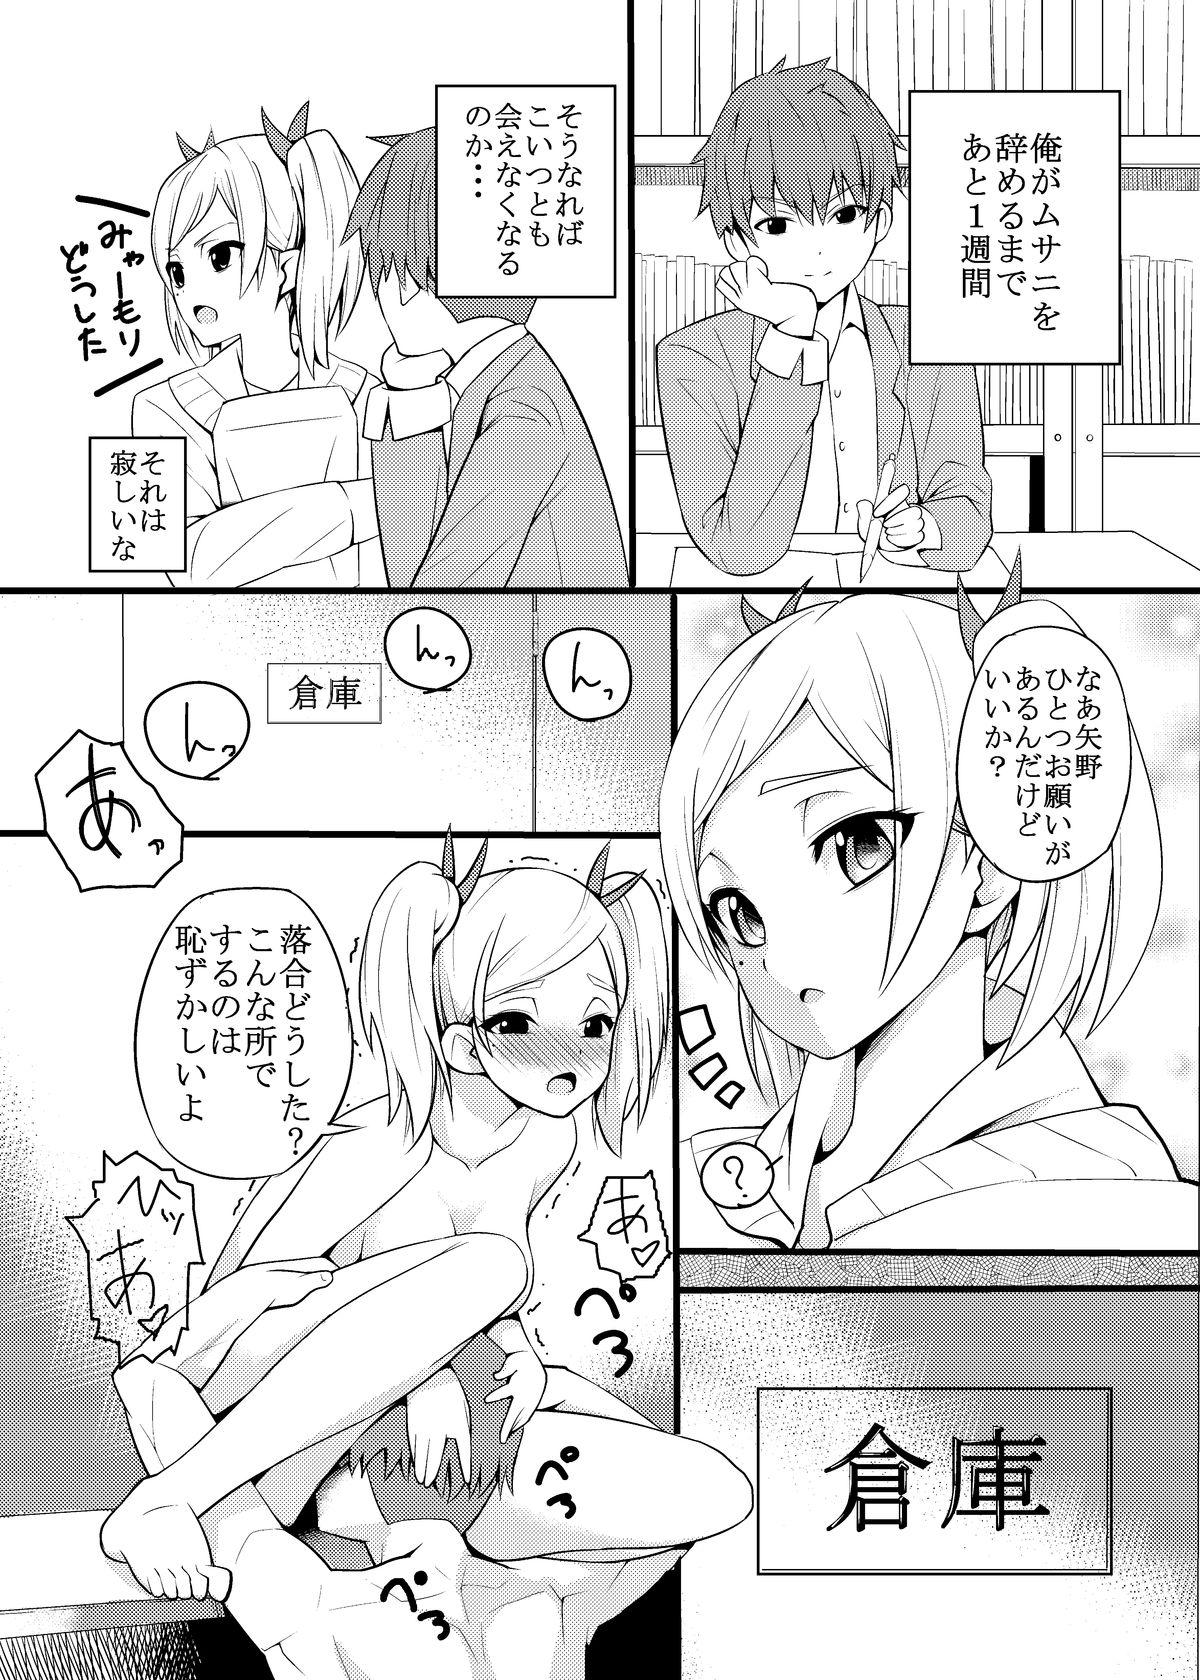 Moneytalks Yano Senpai no H na Manga - Shirobako Babysitter - Page 2